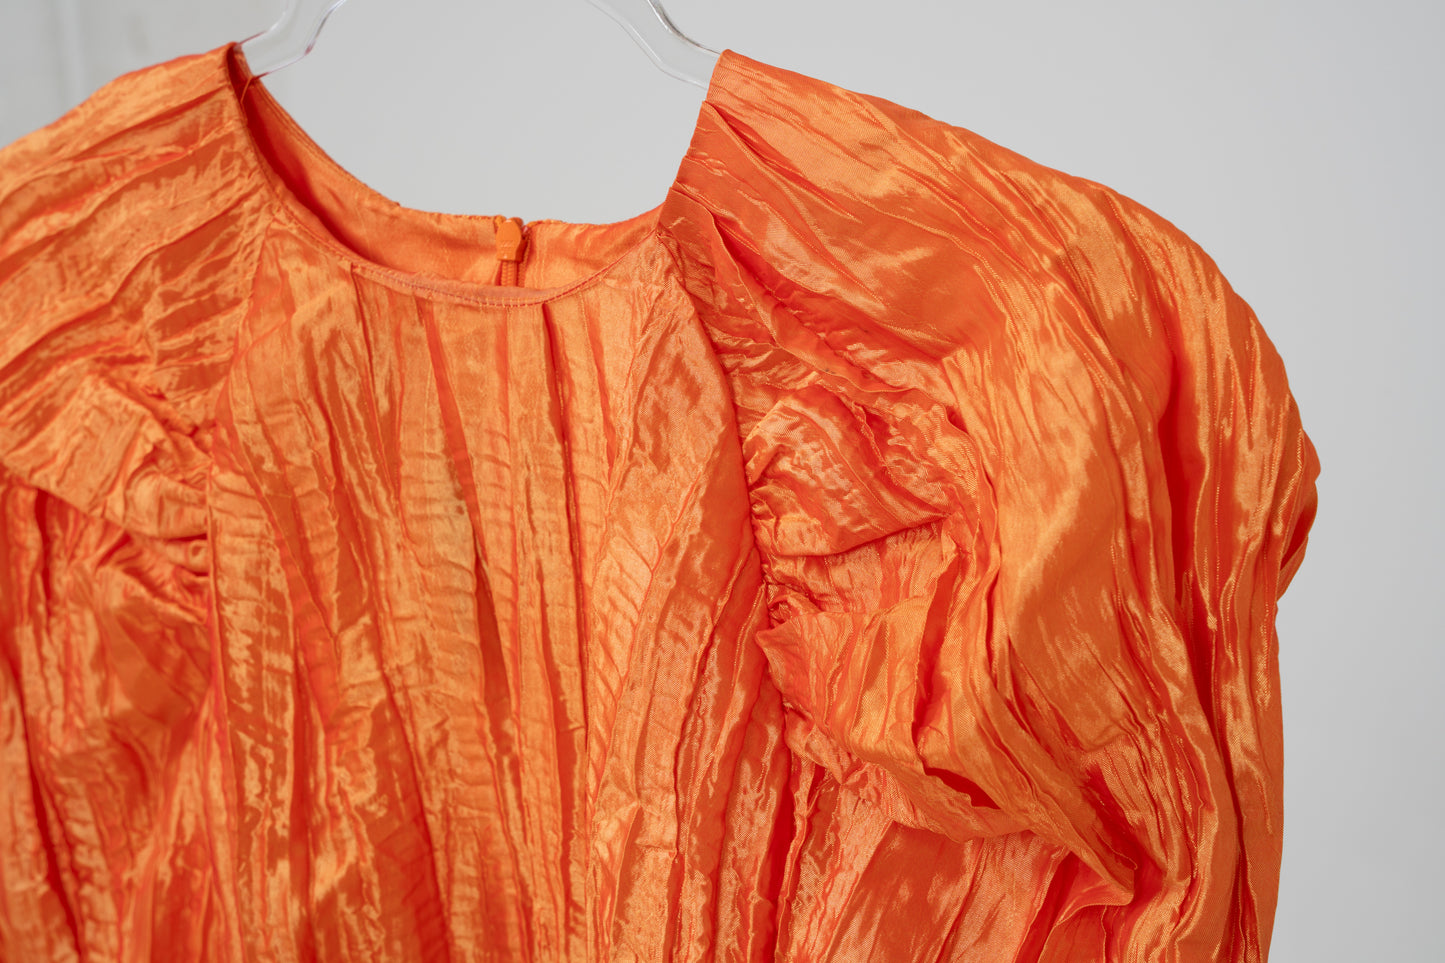 Plissé-sateen mini dress in electric orange, size XS